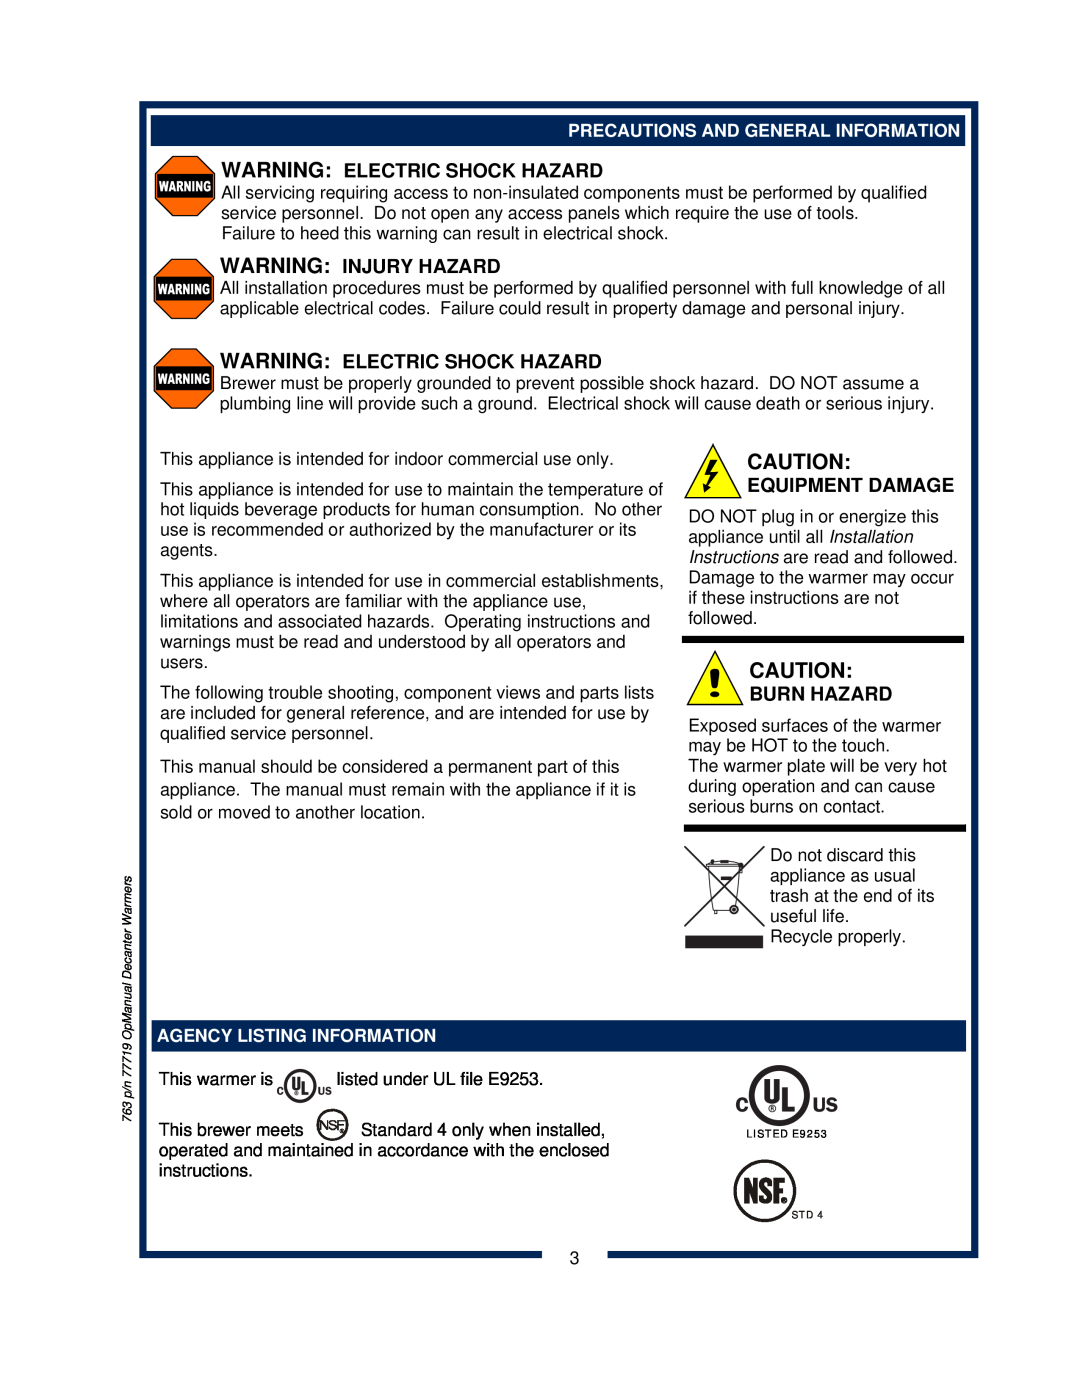 Bloomfield 8872, 8871, 8851, 8852 Warning Electric Shock Hazard, Warning Injury Hazard, Equipment Damage, Burn Hazard, C Us 